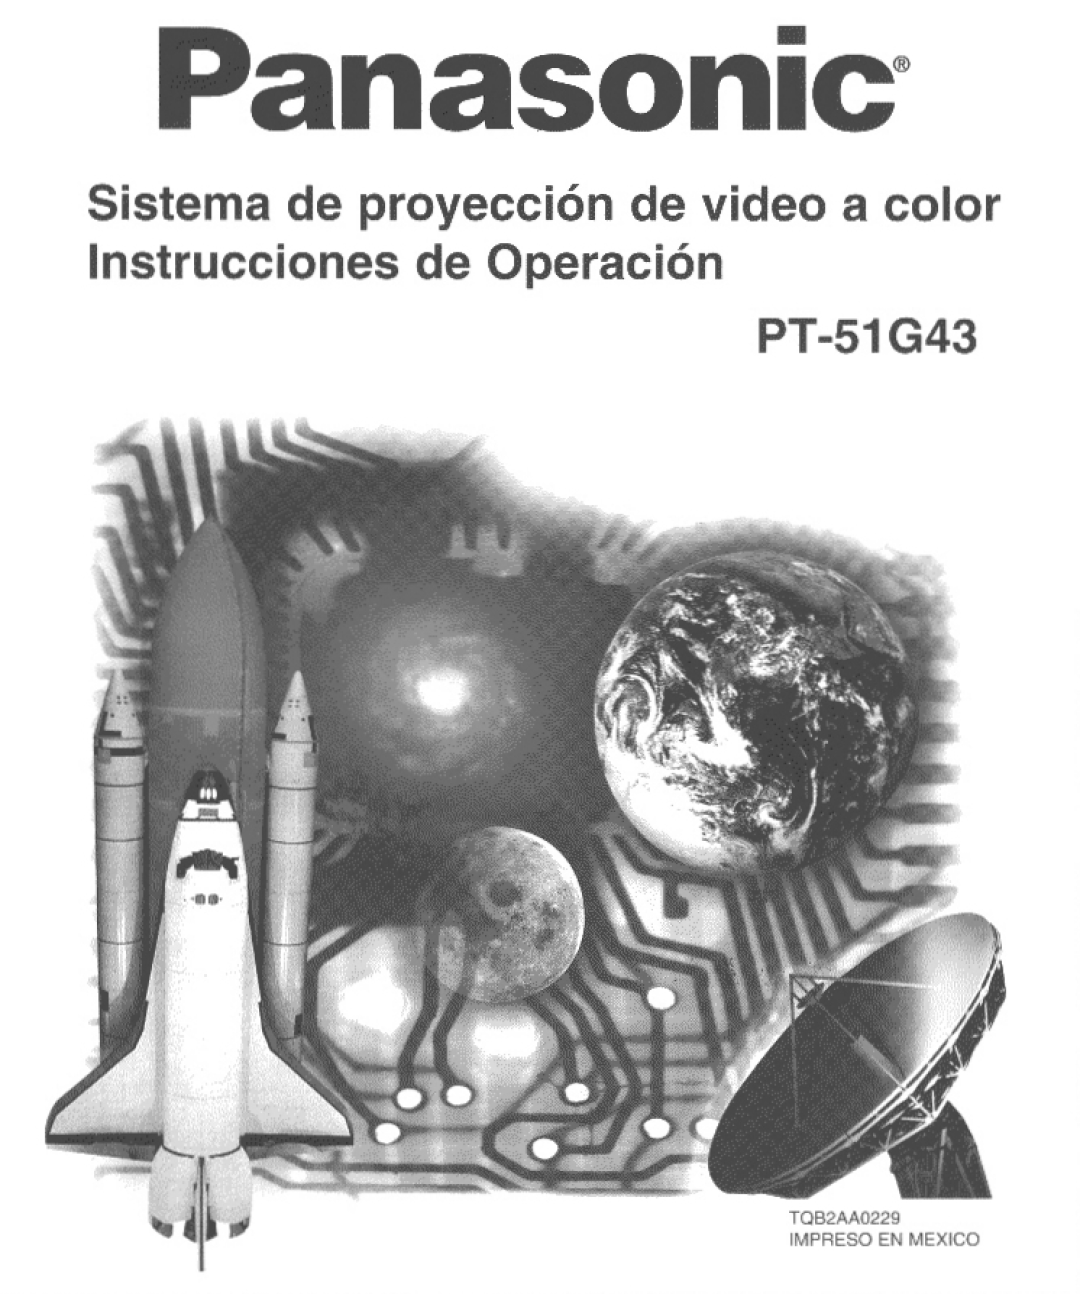 Panasonic PT-51G43 manual 